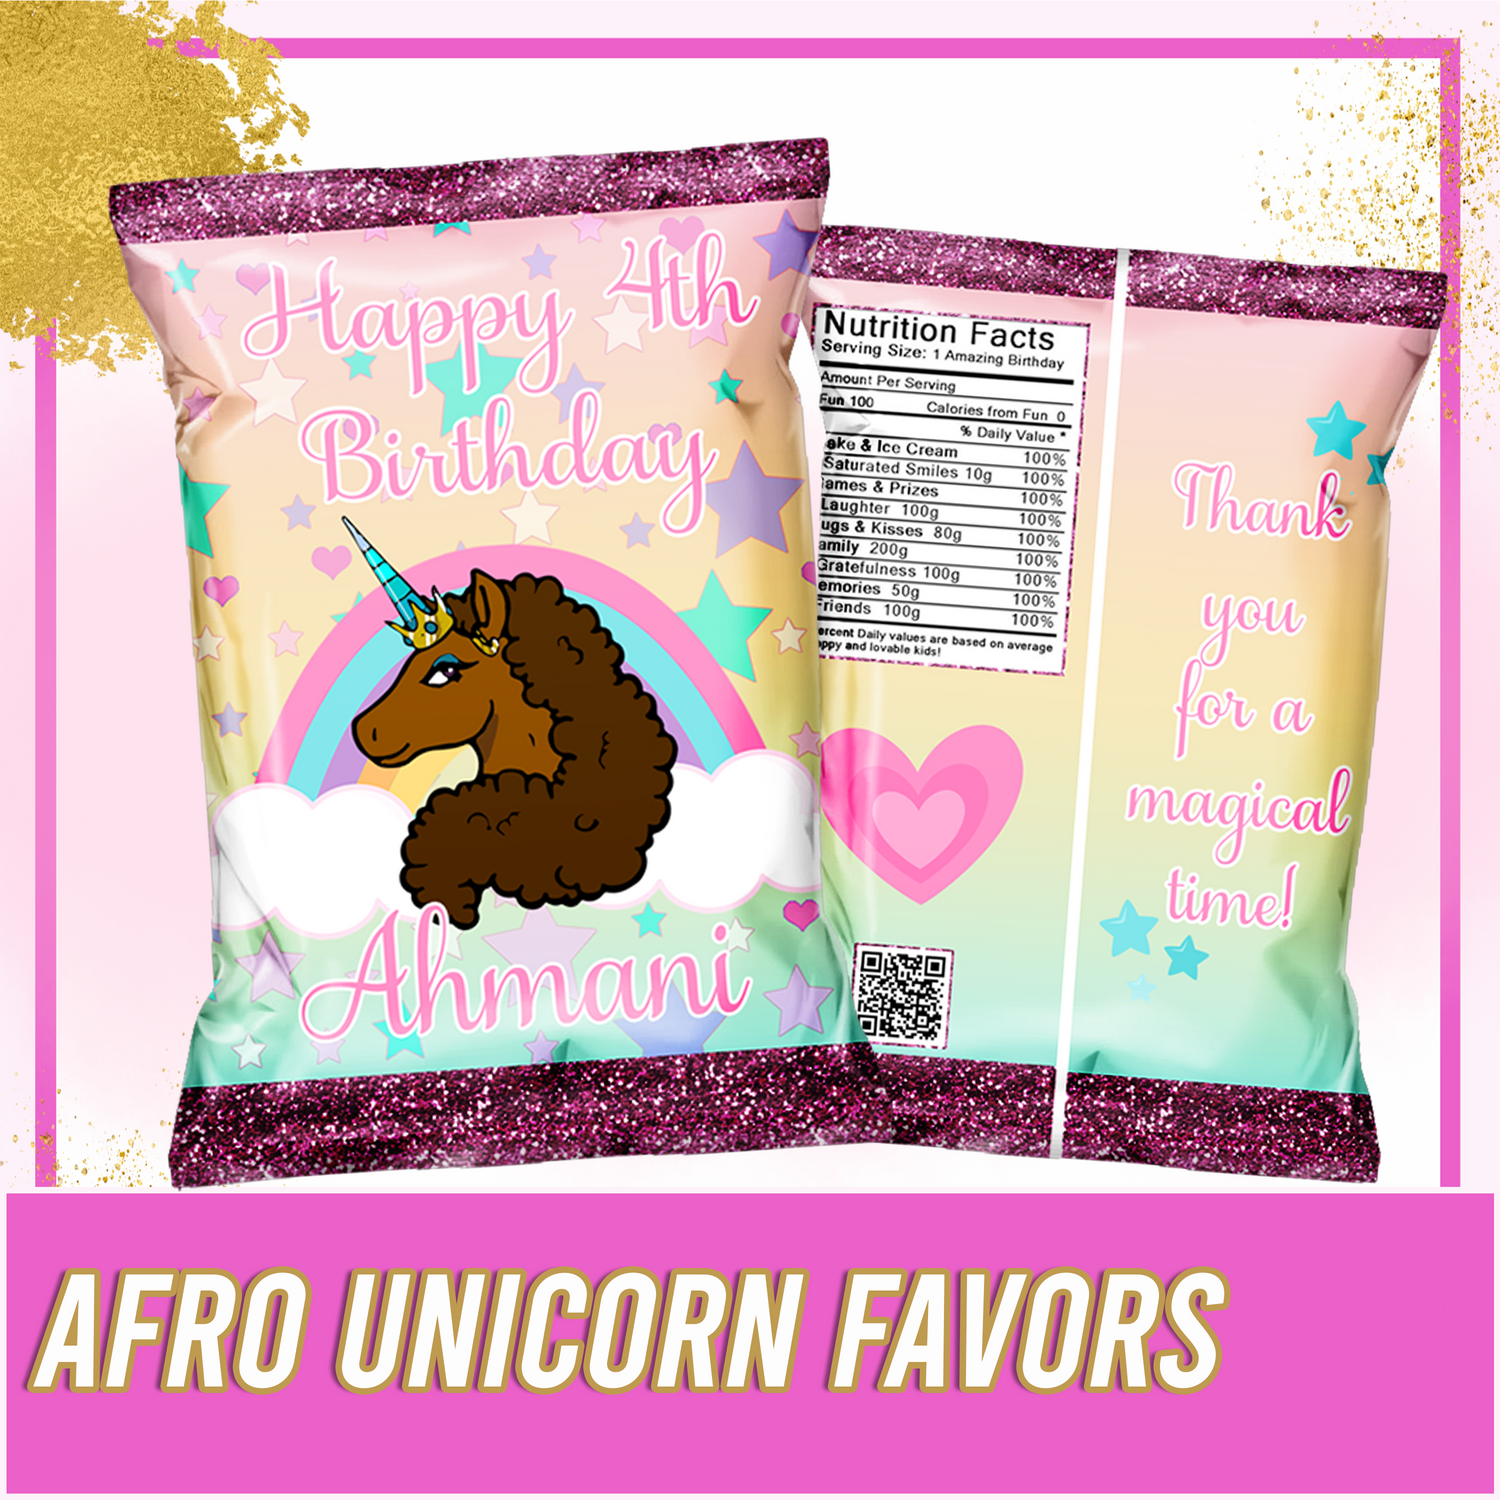 Afro Unicorn Favors